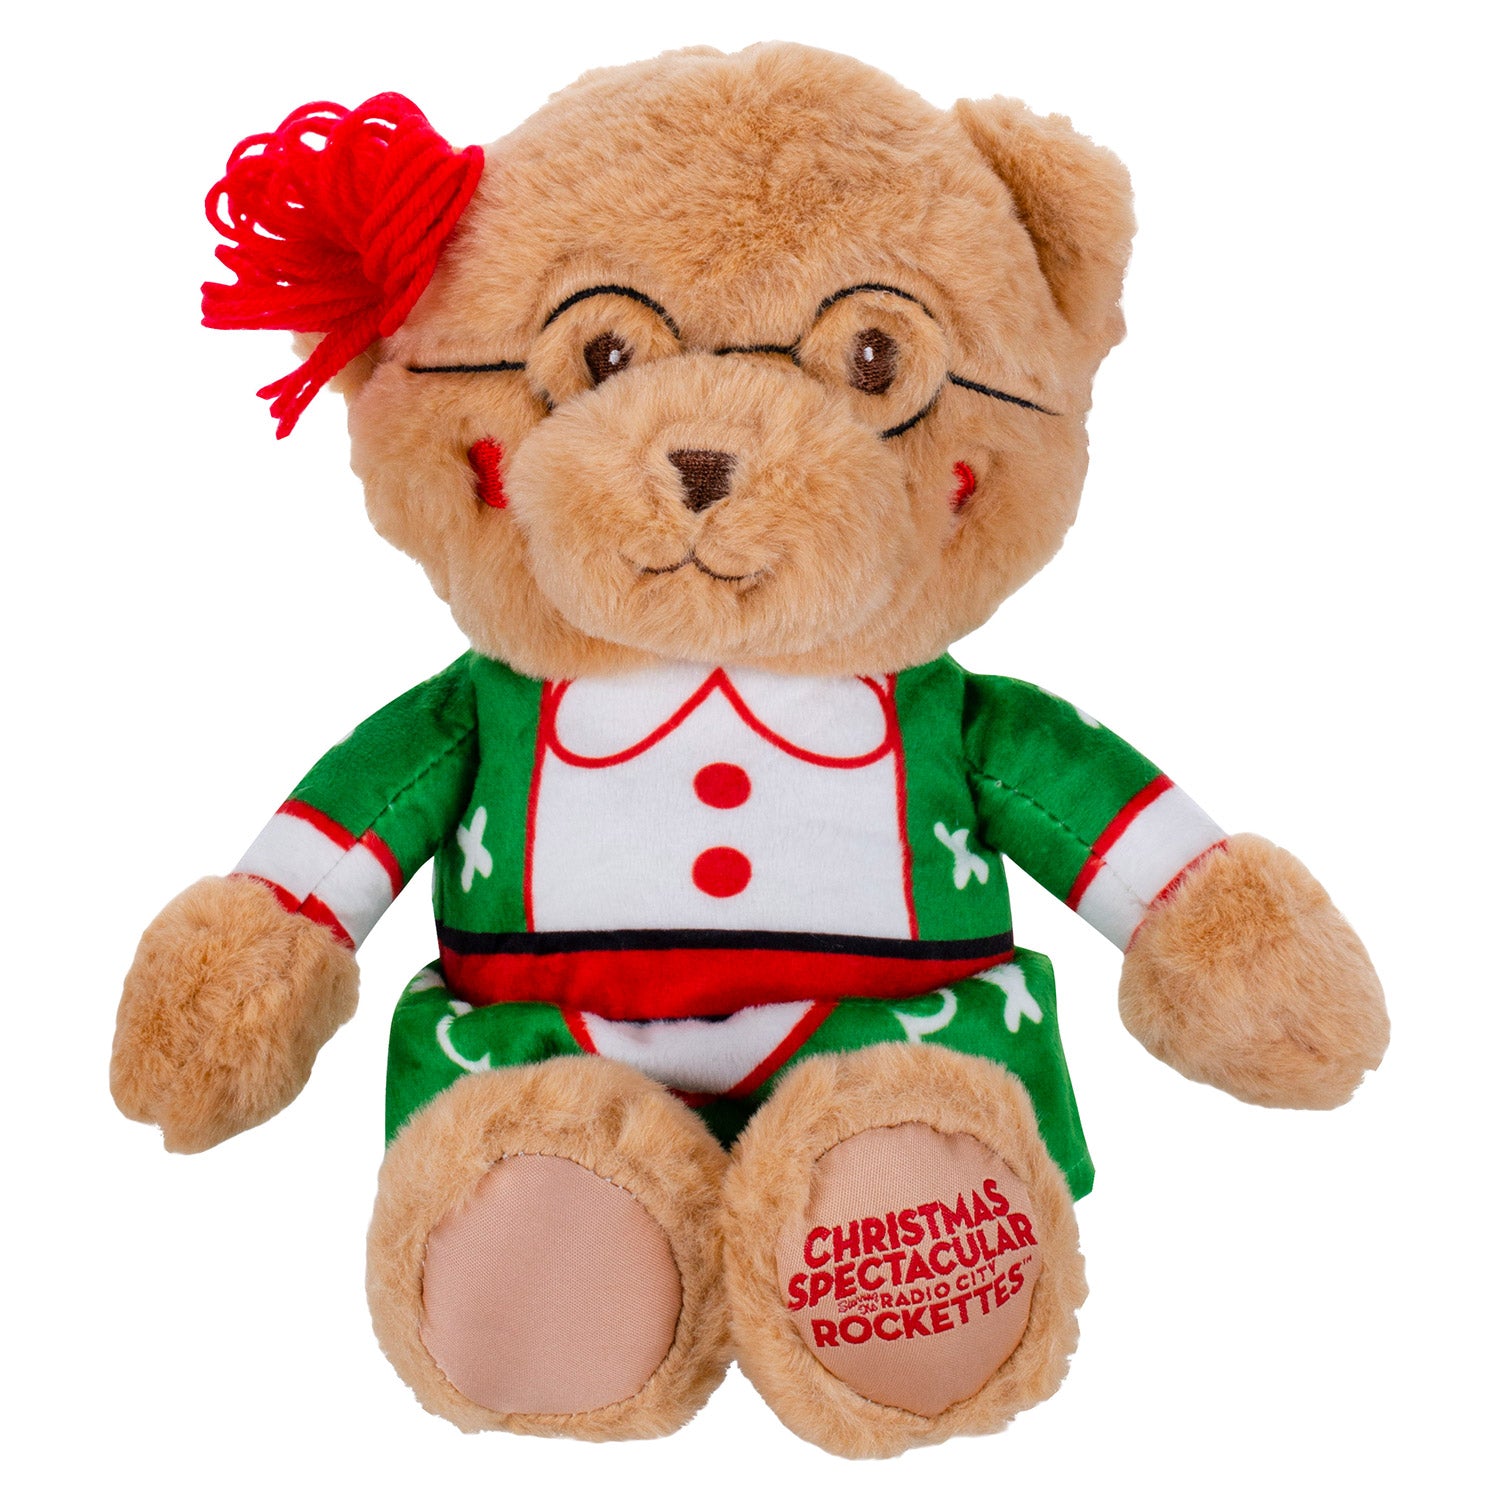 Christmas-themed plush teddy bear, with Radio City Rockettes Christmas Spectacular branding